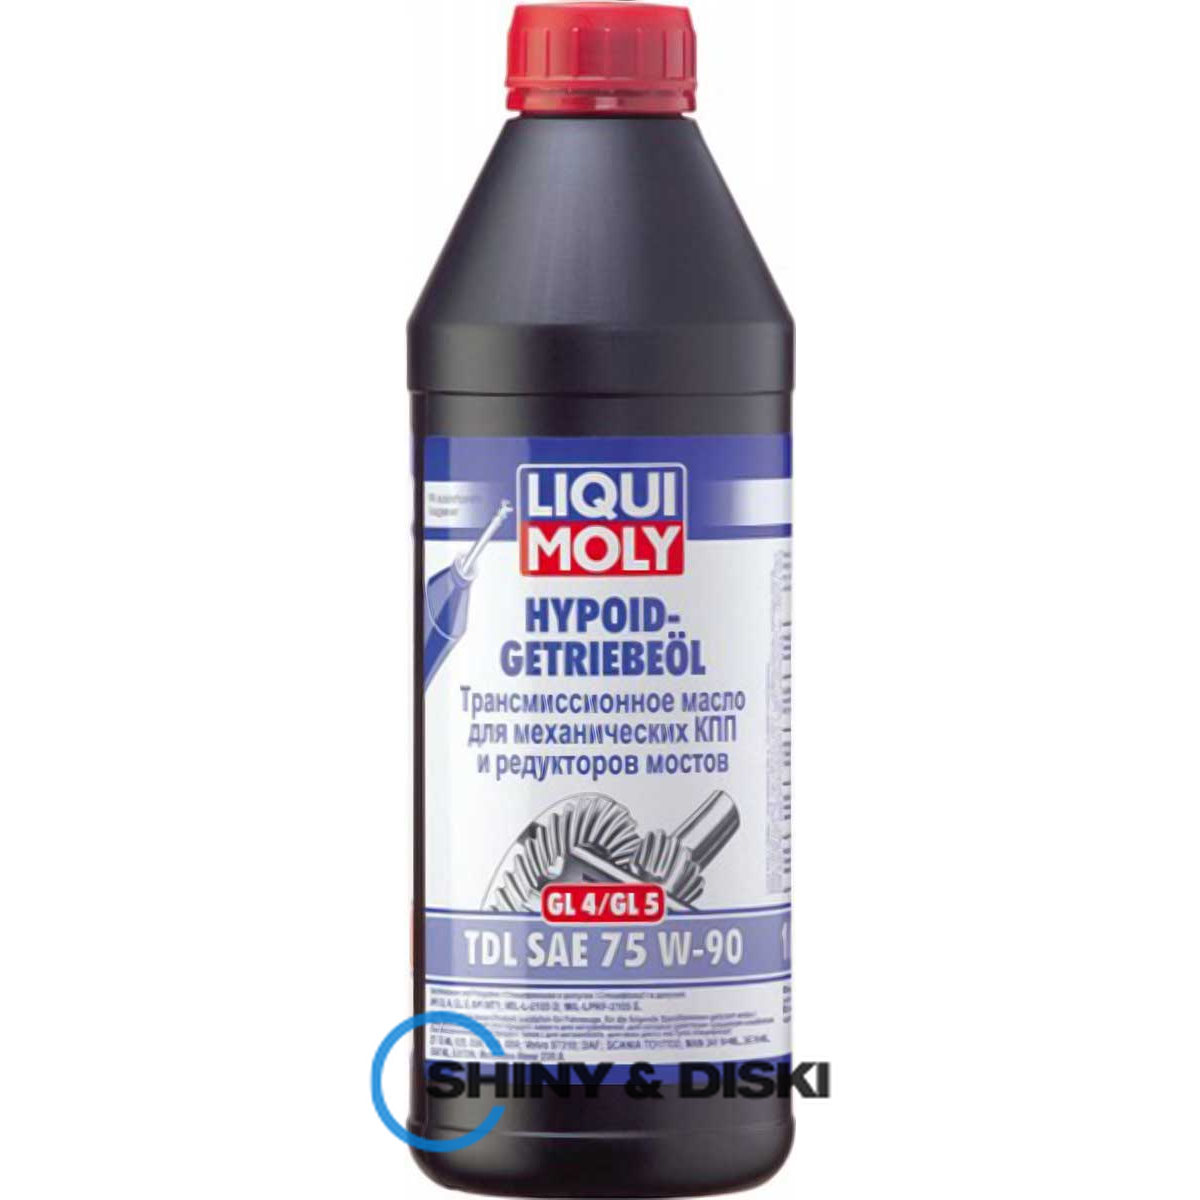 liqui moly hypoid-getriebeoil tdl